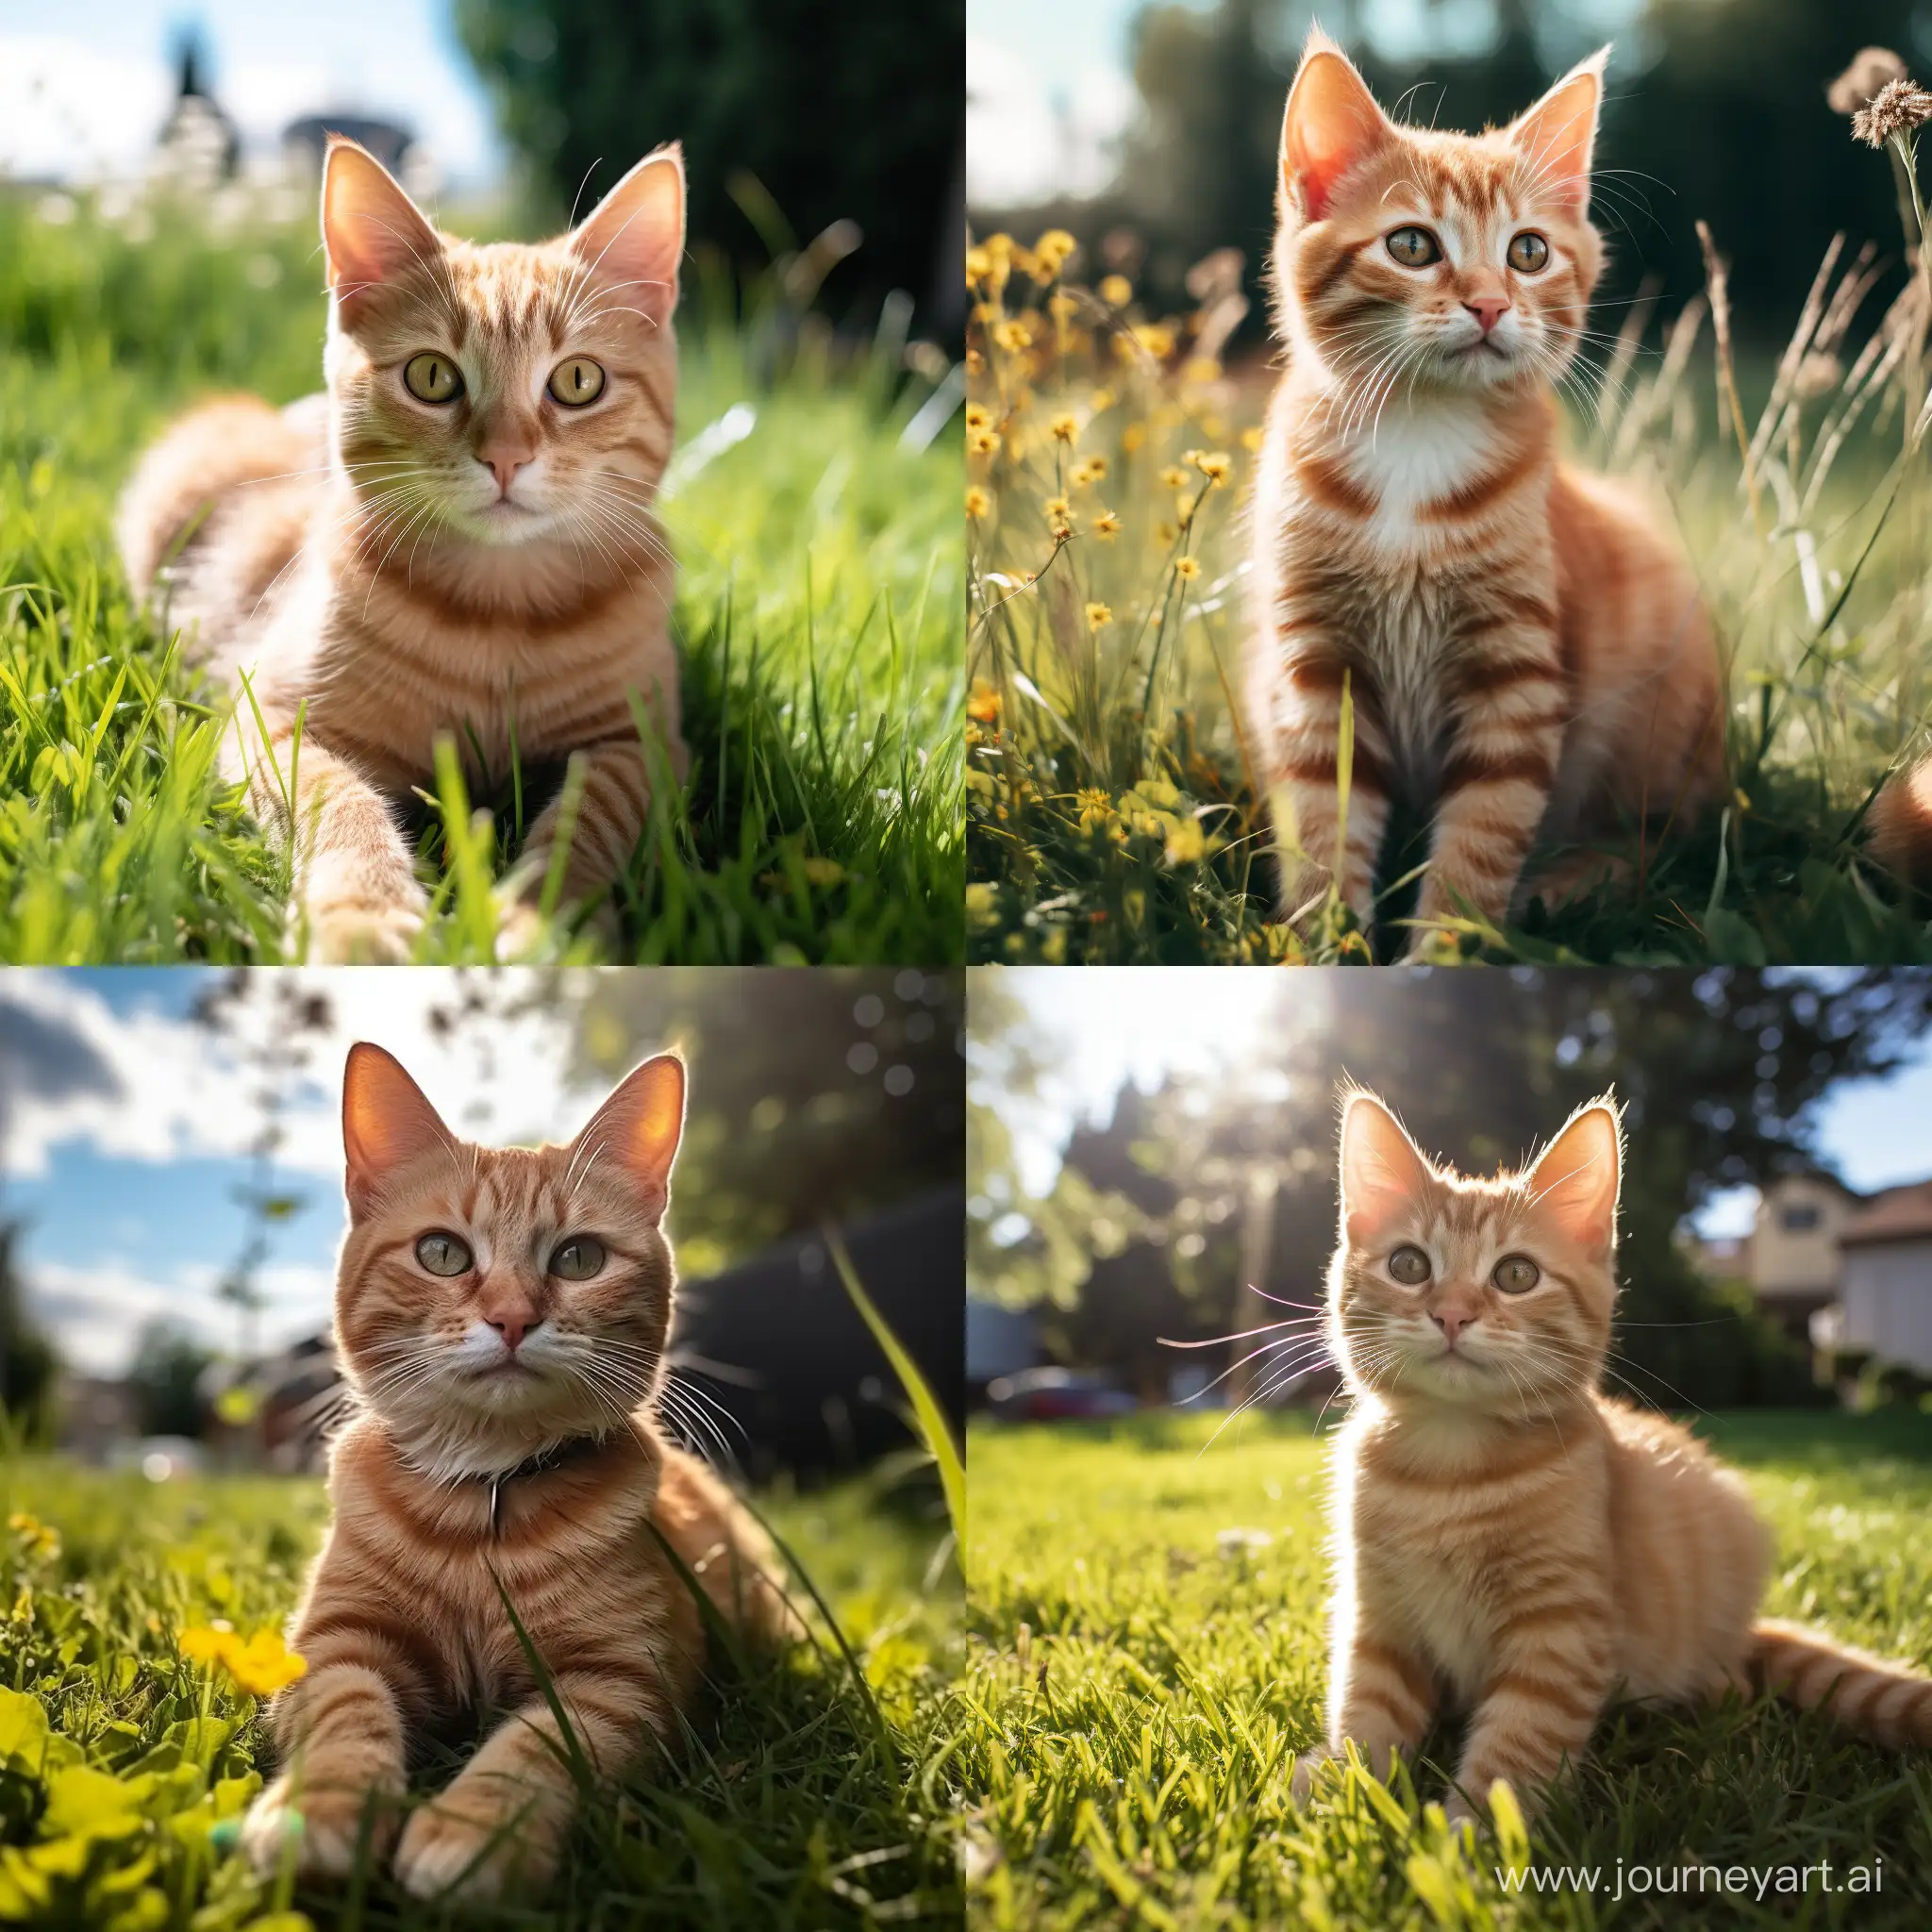 Charming-Orange-Tabby-Cat-Enjoying-Sunny-Day-on-the-Grass